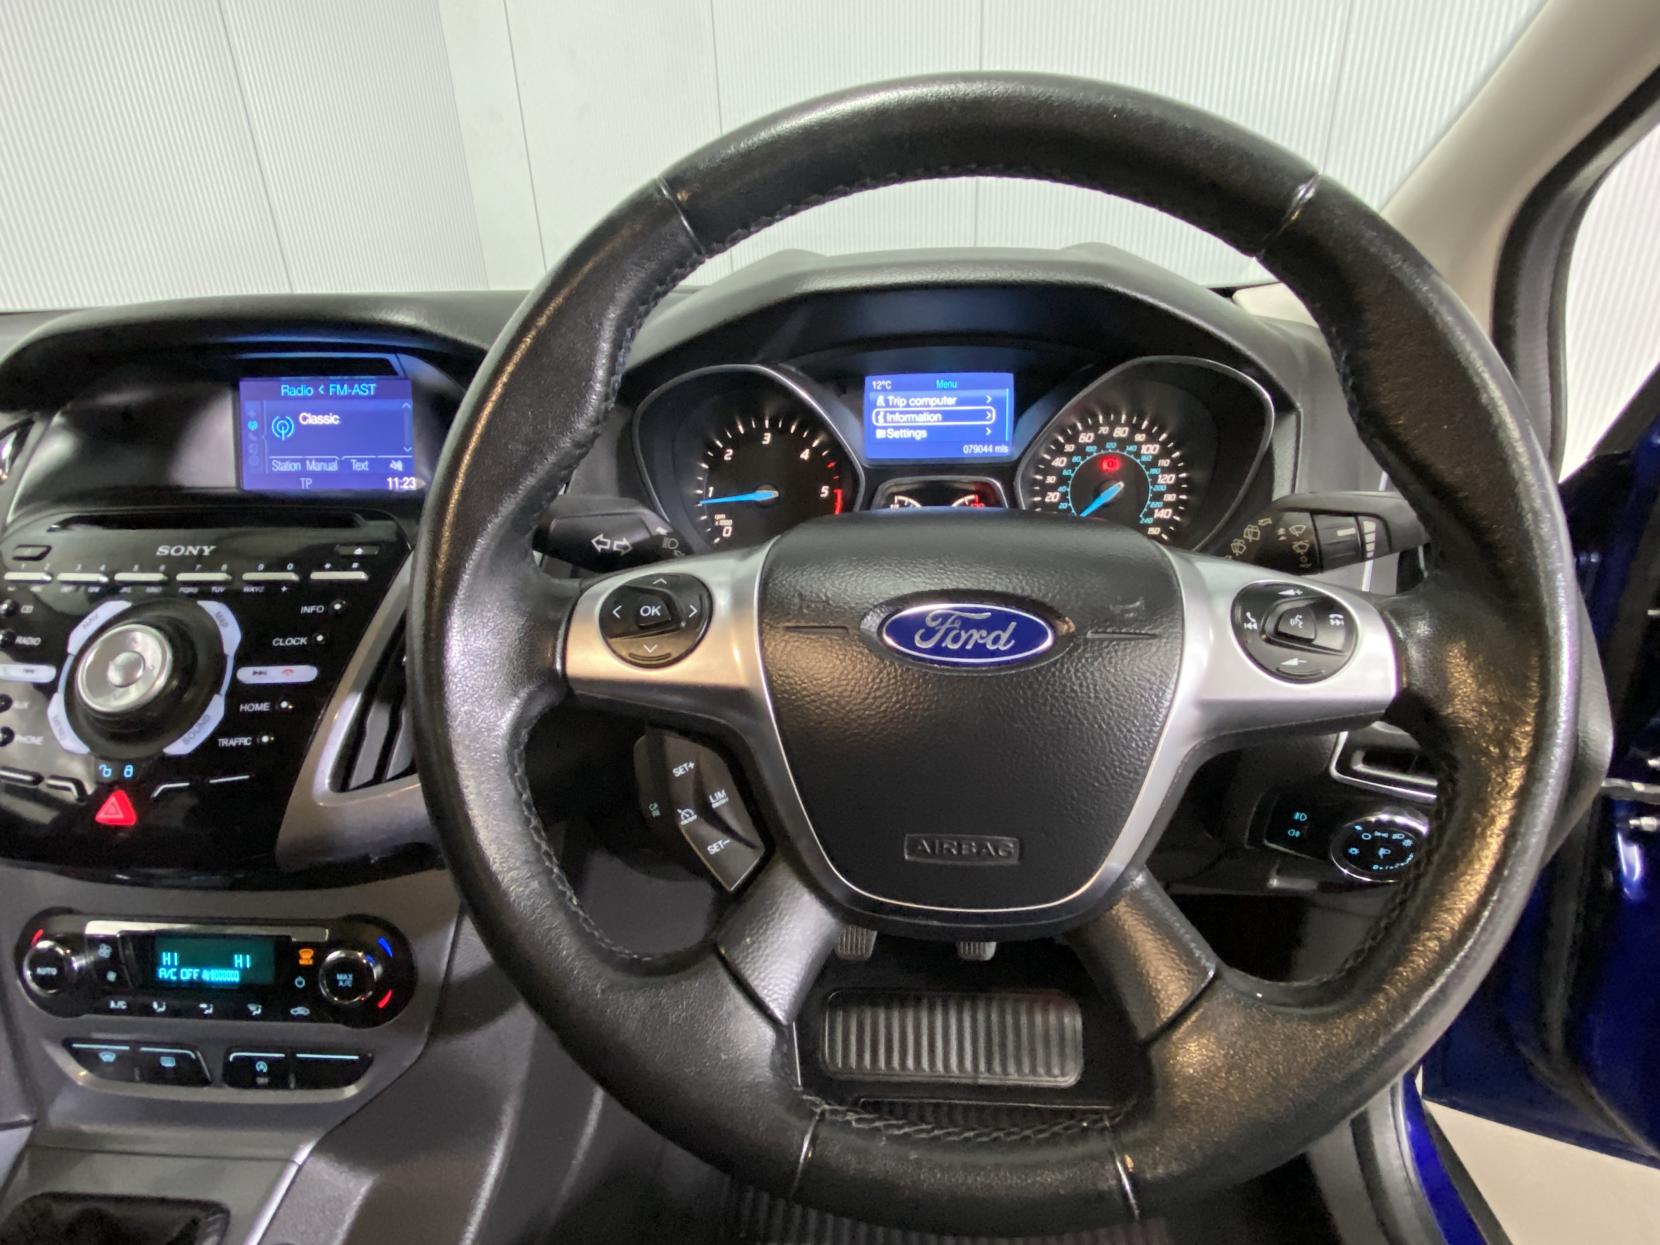 Ford Focus 1.6 TDCi Titanium Navigator Hatchback 5dr Diesel Manual Euro 5 (s/s) (115 ps)